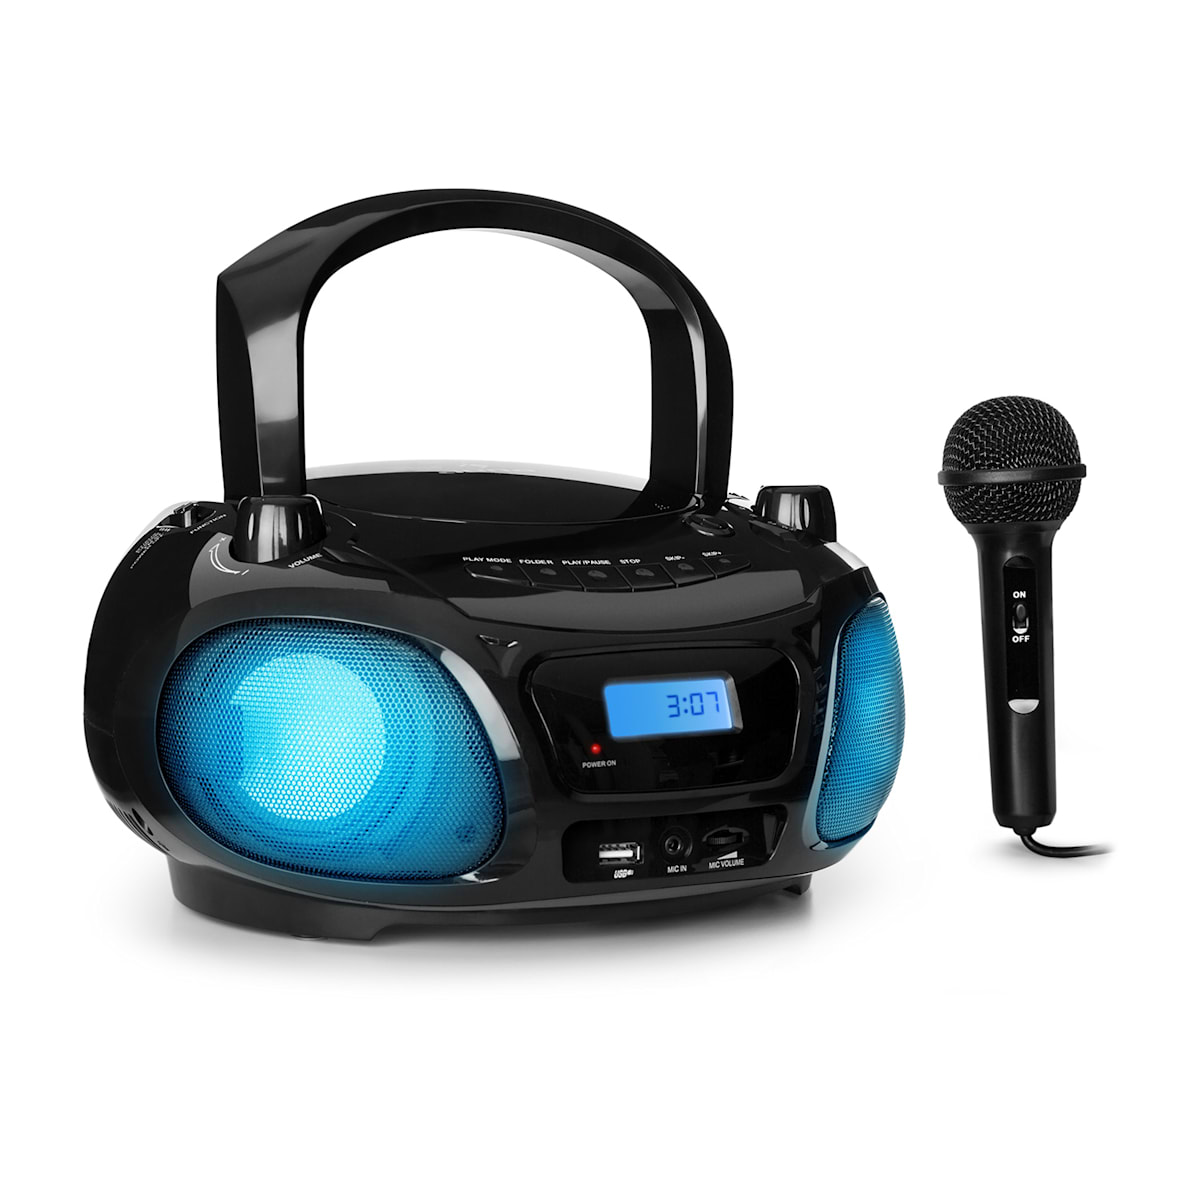 Roadie Sing CD Boombox avec radio FM et spectacle lumineux, Lecteur CD, Micro, Radio FM, Bluetooth, Effet lumineux LED disco, USB, AUDIO IN